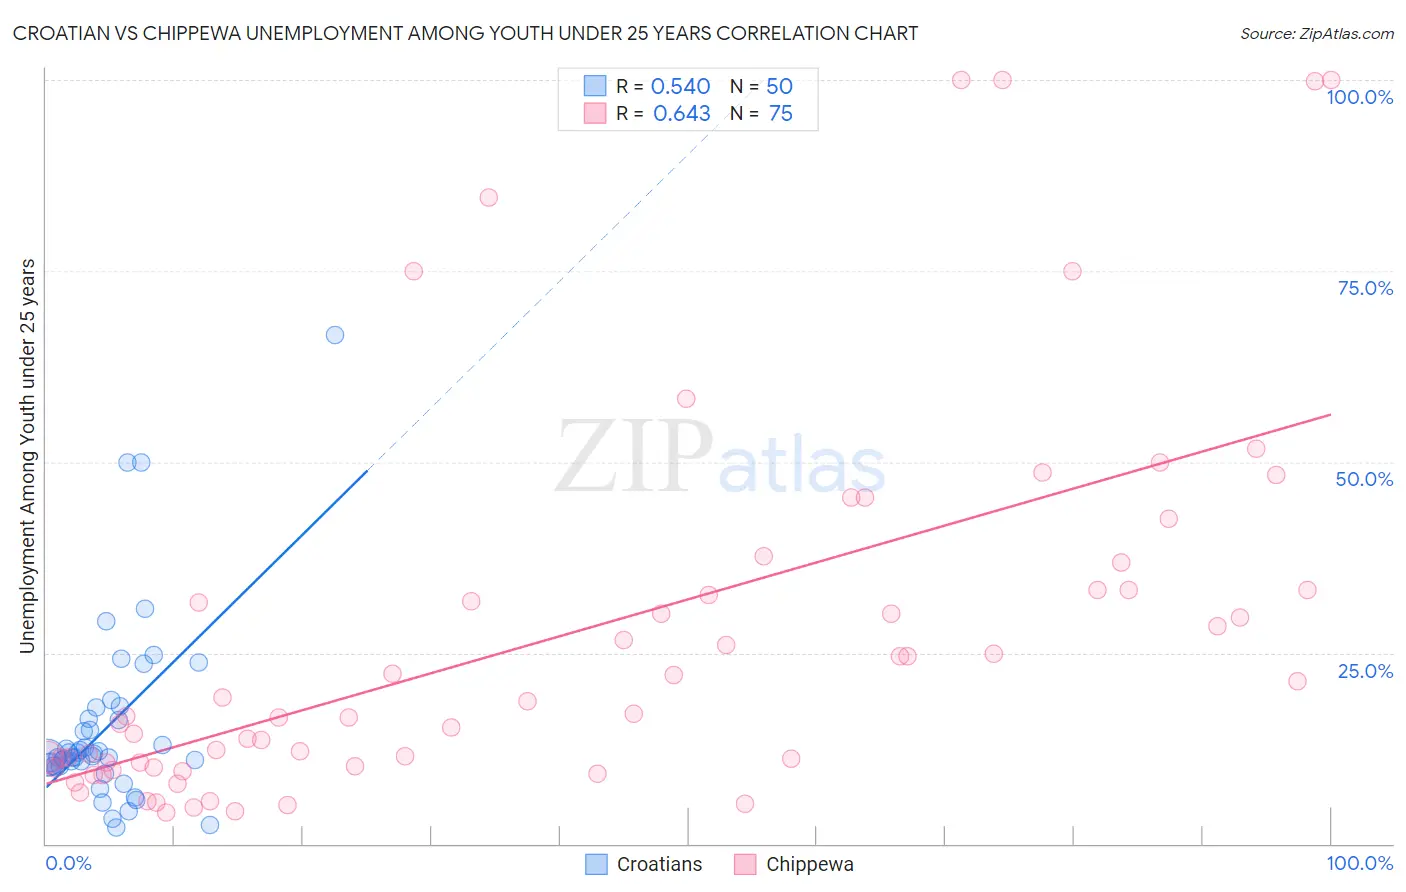 Croatian vs Chippewa Unemployment Among Youth under 25 years